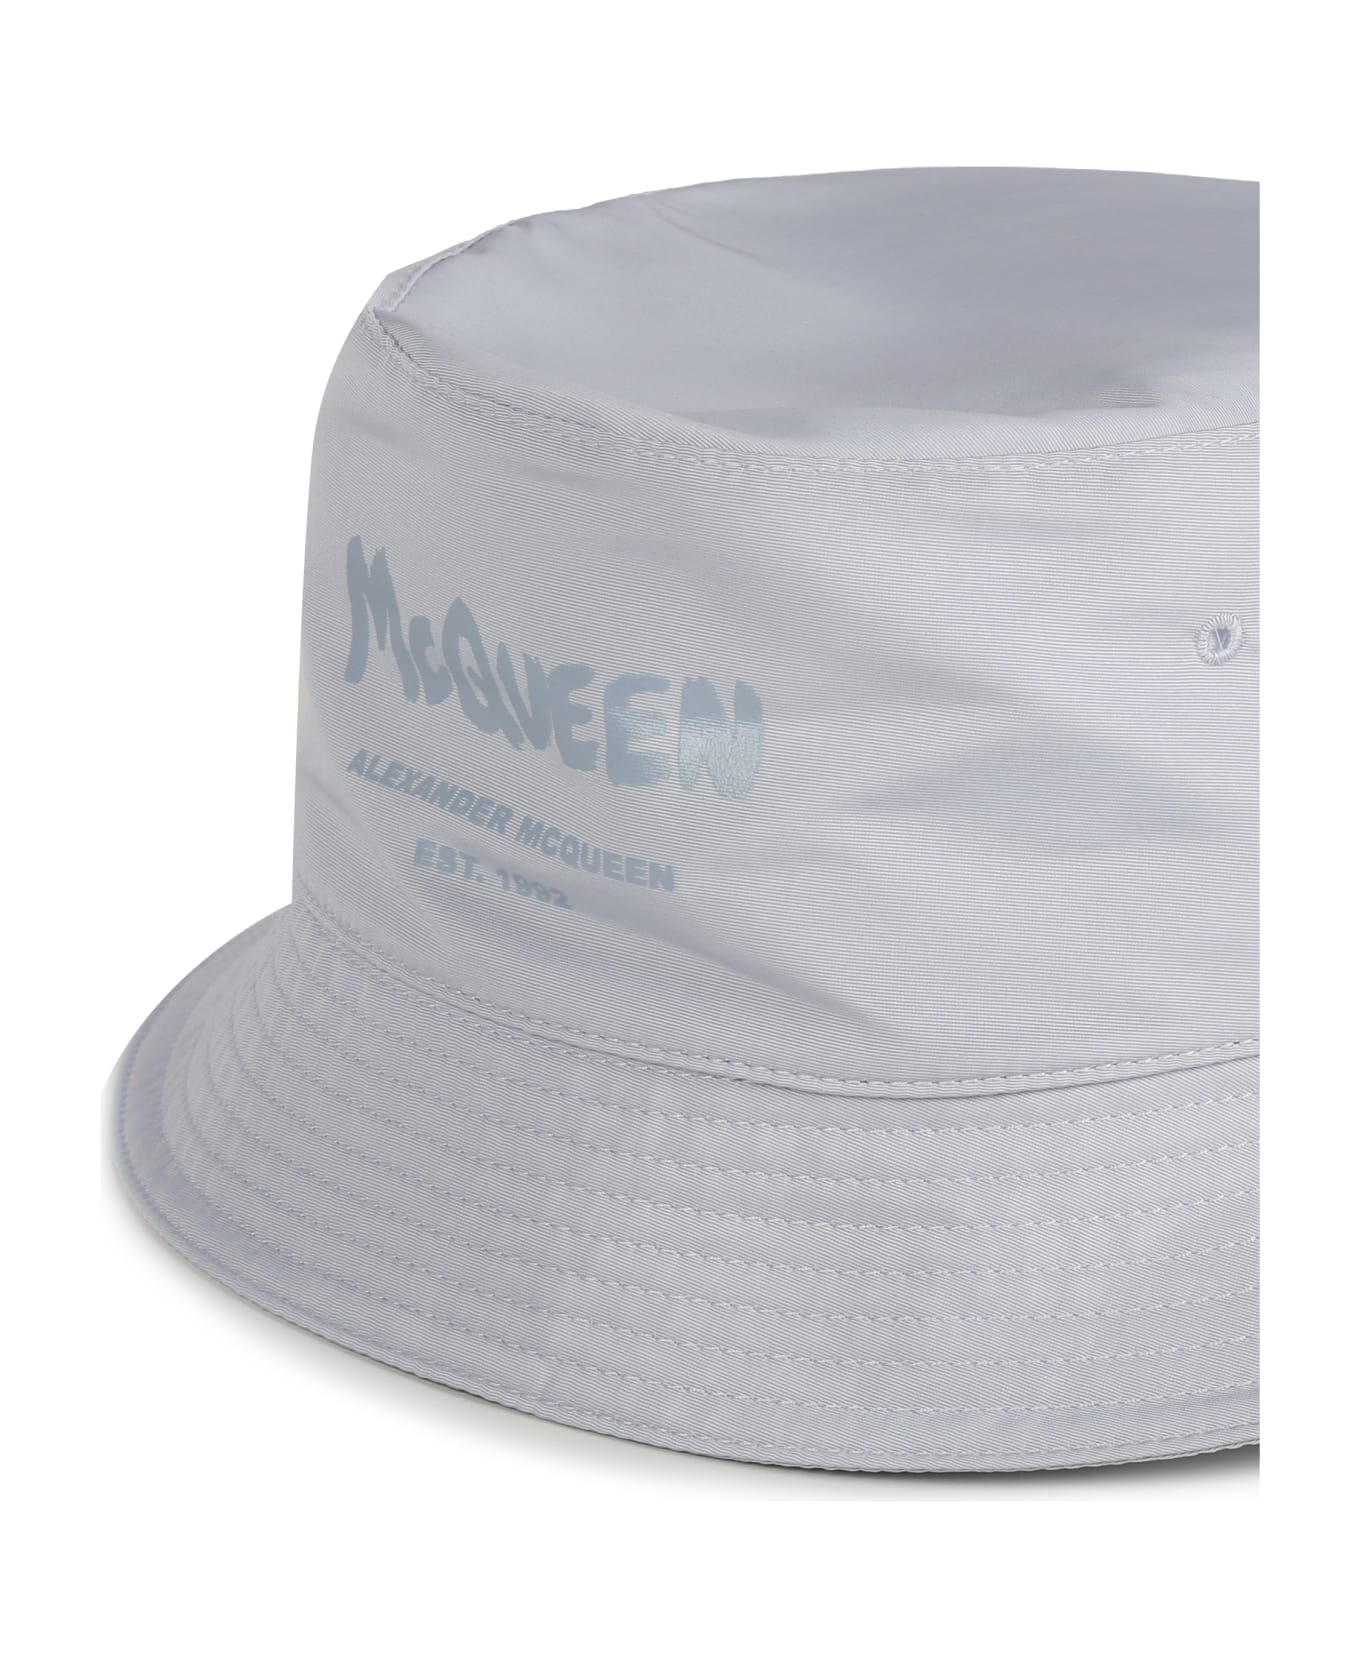 Alexander McQueen Mcqueen Graffiti Bucket Hat - Spring blue 帽子